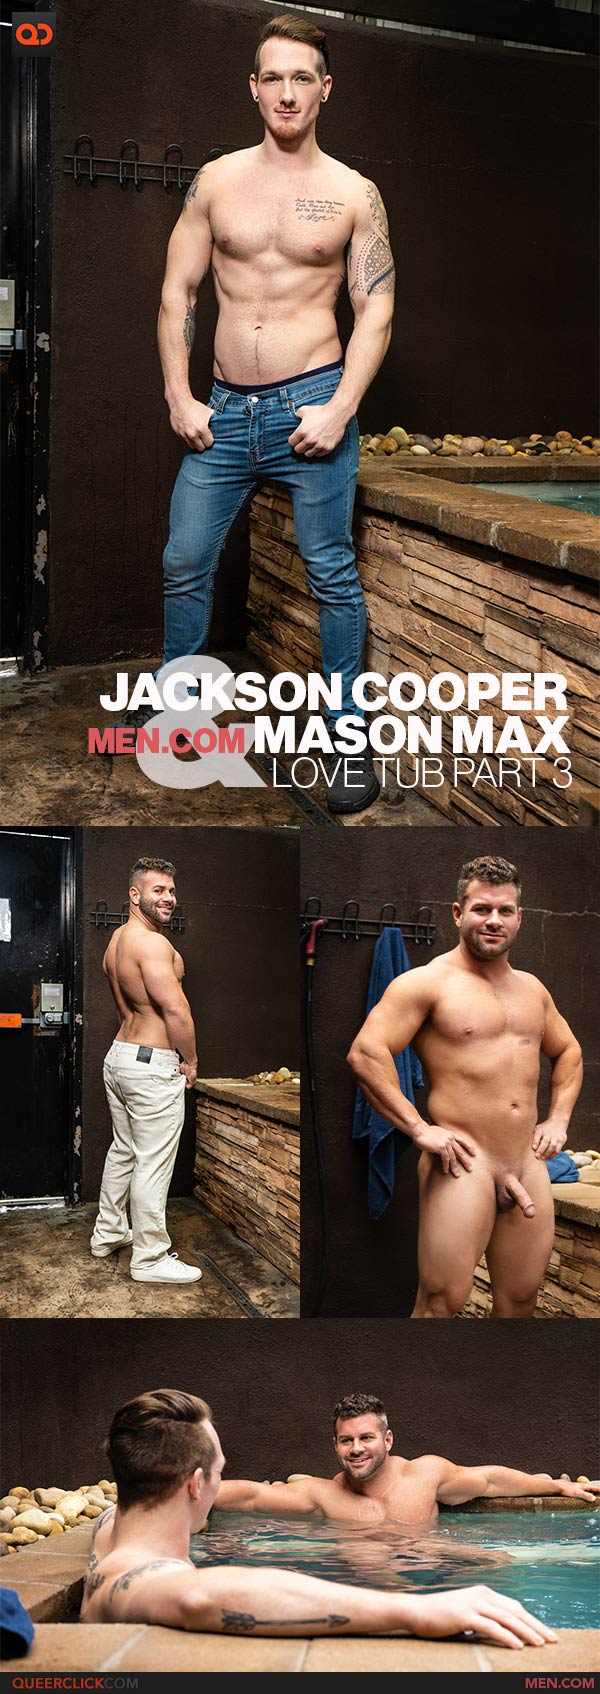 Men.com: Jackson Cooper and Mason Max